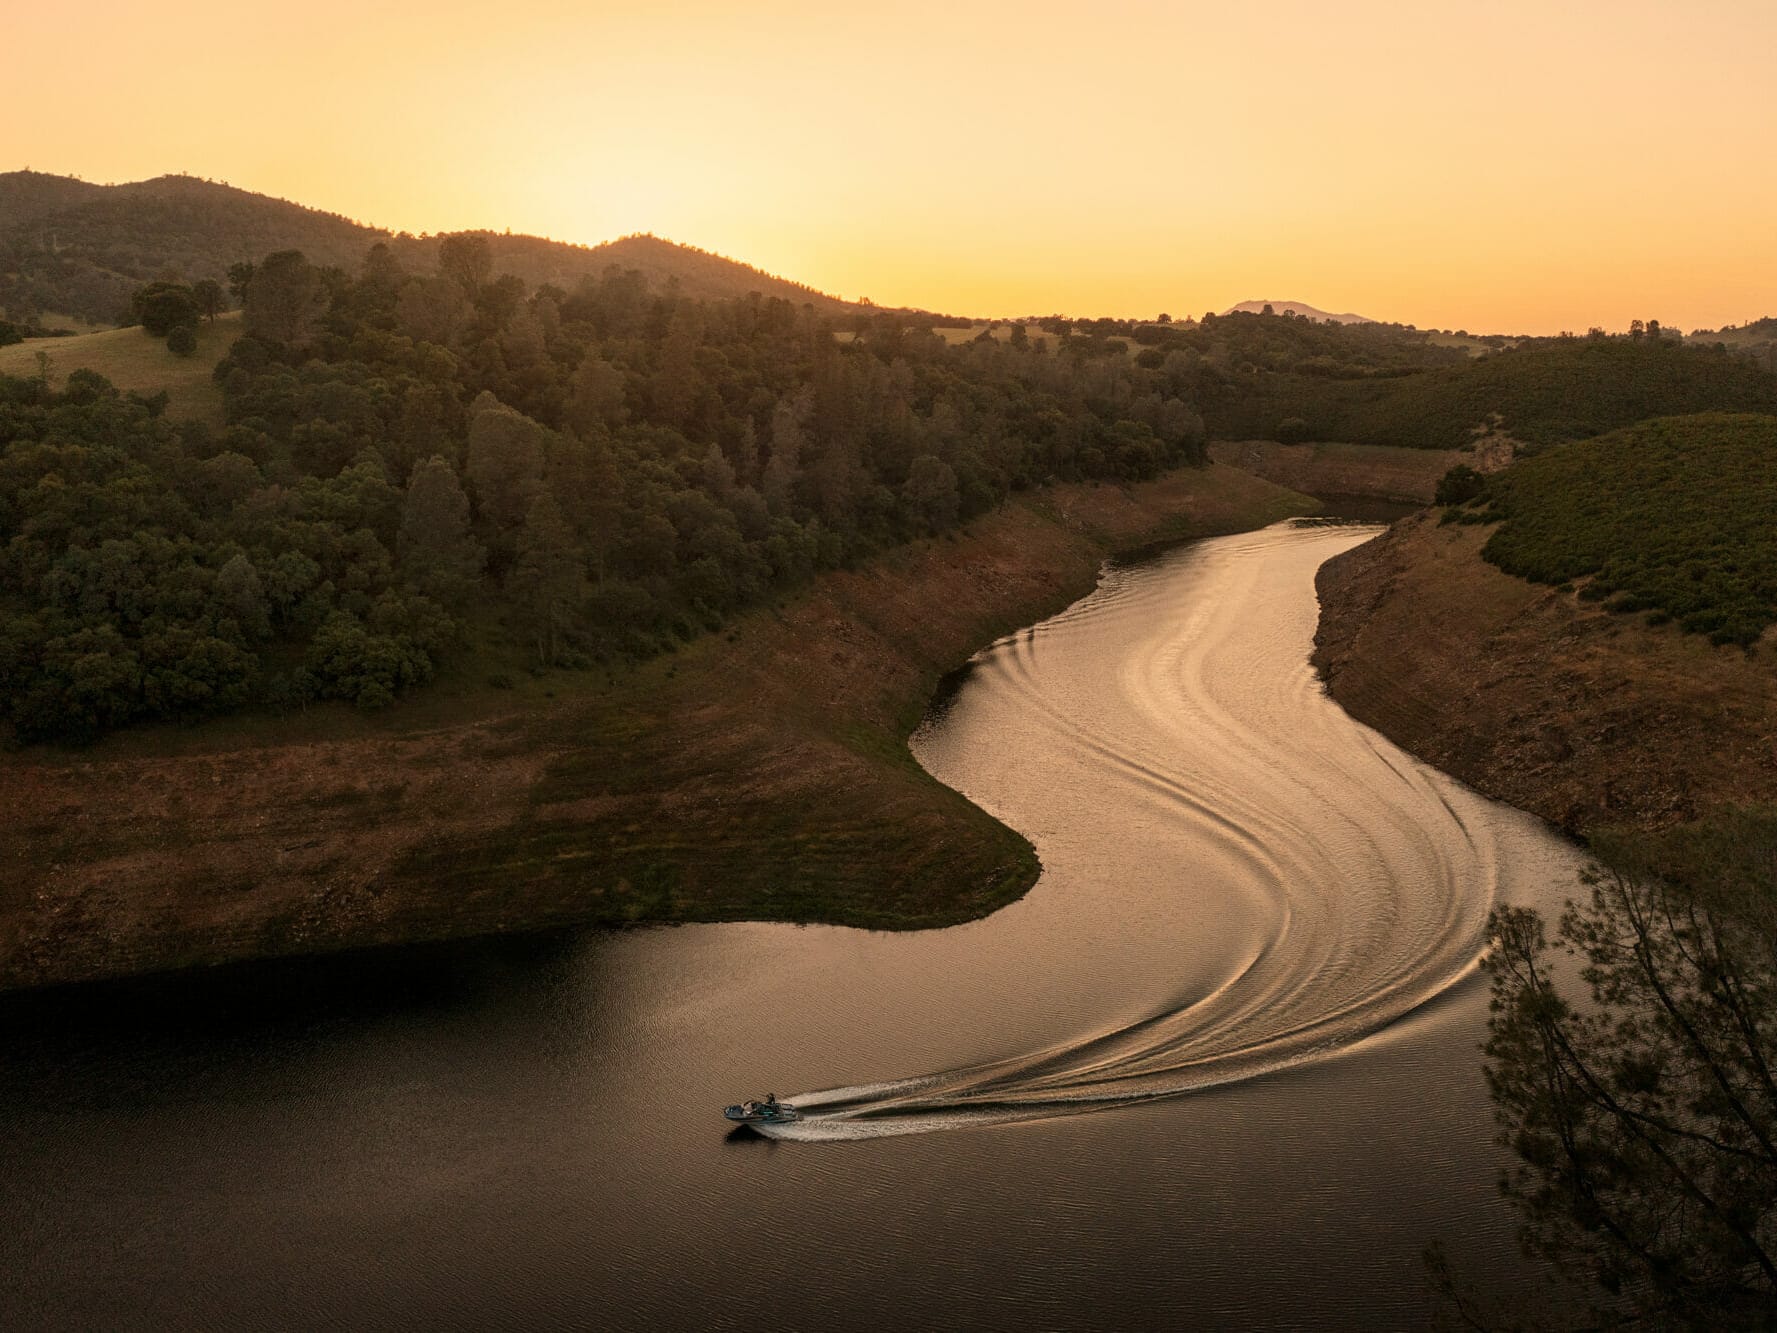 A wakesurf boat cruising down a river at sunset.